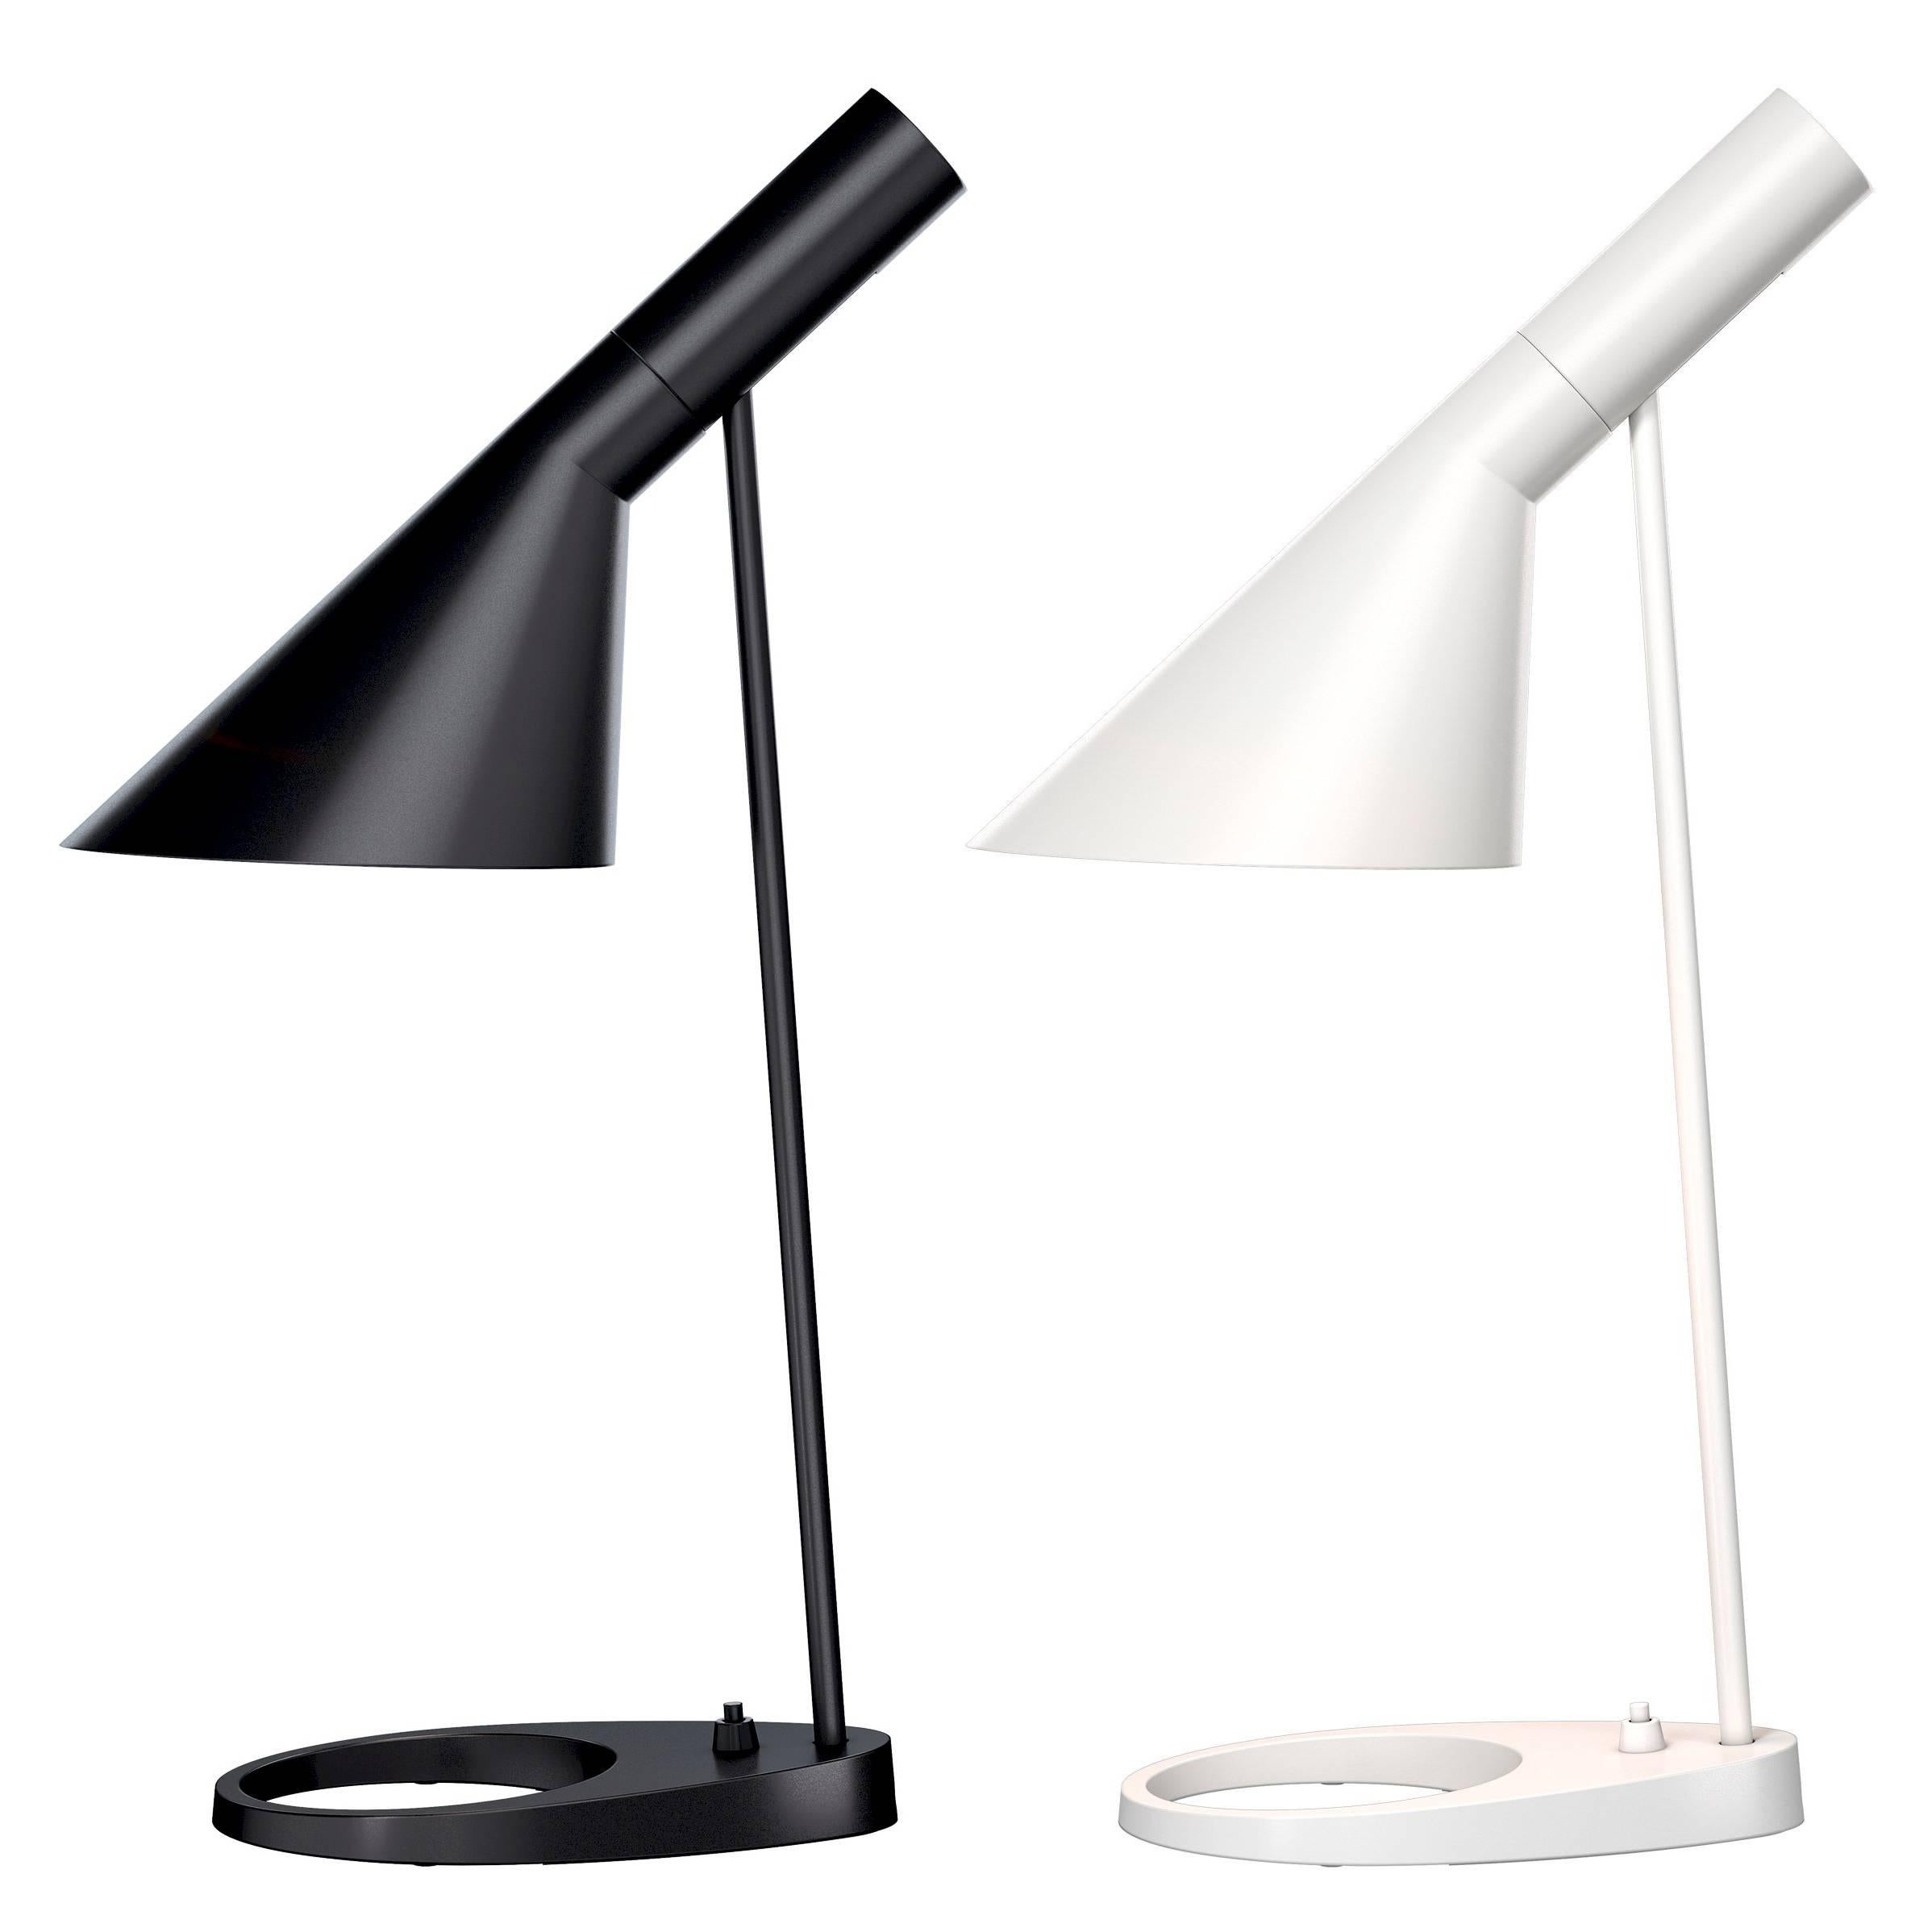 Cast Arne Jacobsen AJ Table Lamp in Stainless Steel for Louis Poulsen For Sale